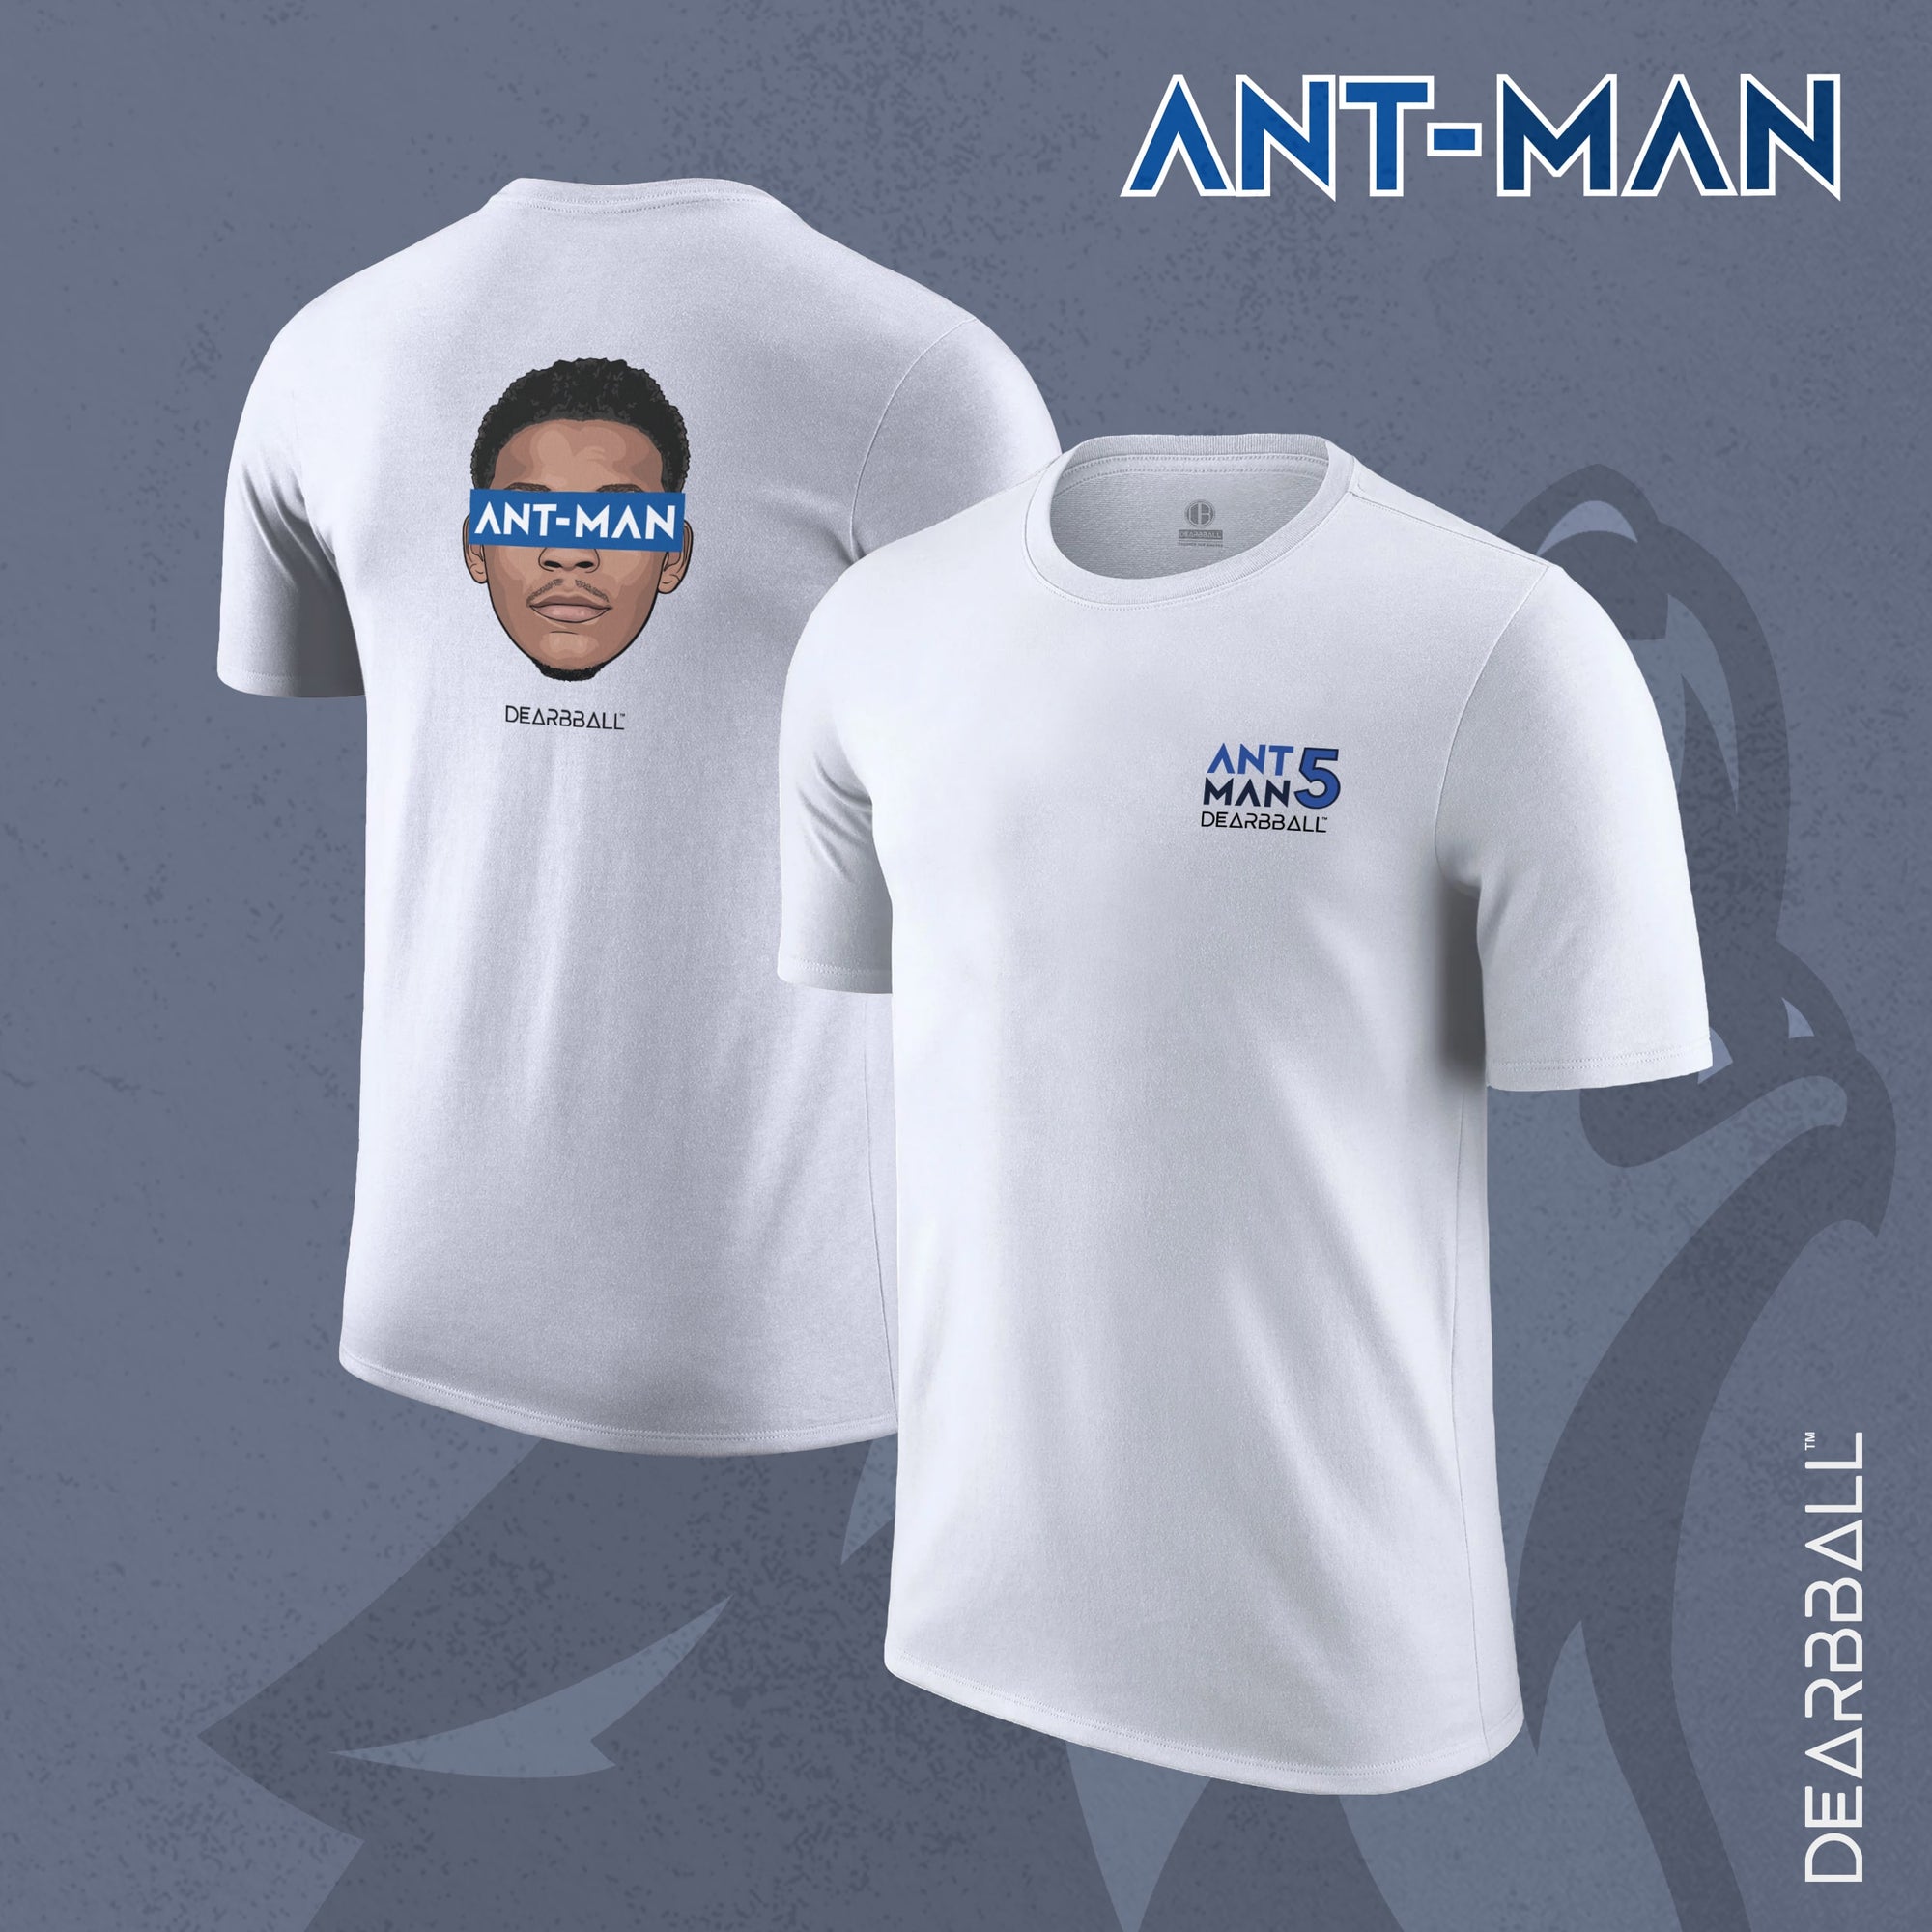 DearBBall T-Shirt - Ant-Man Patch Brodé Premium Edition